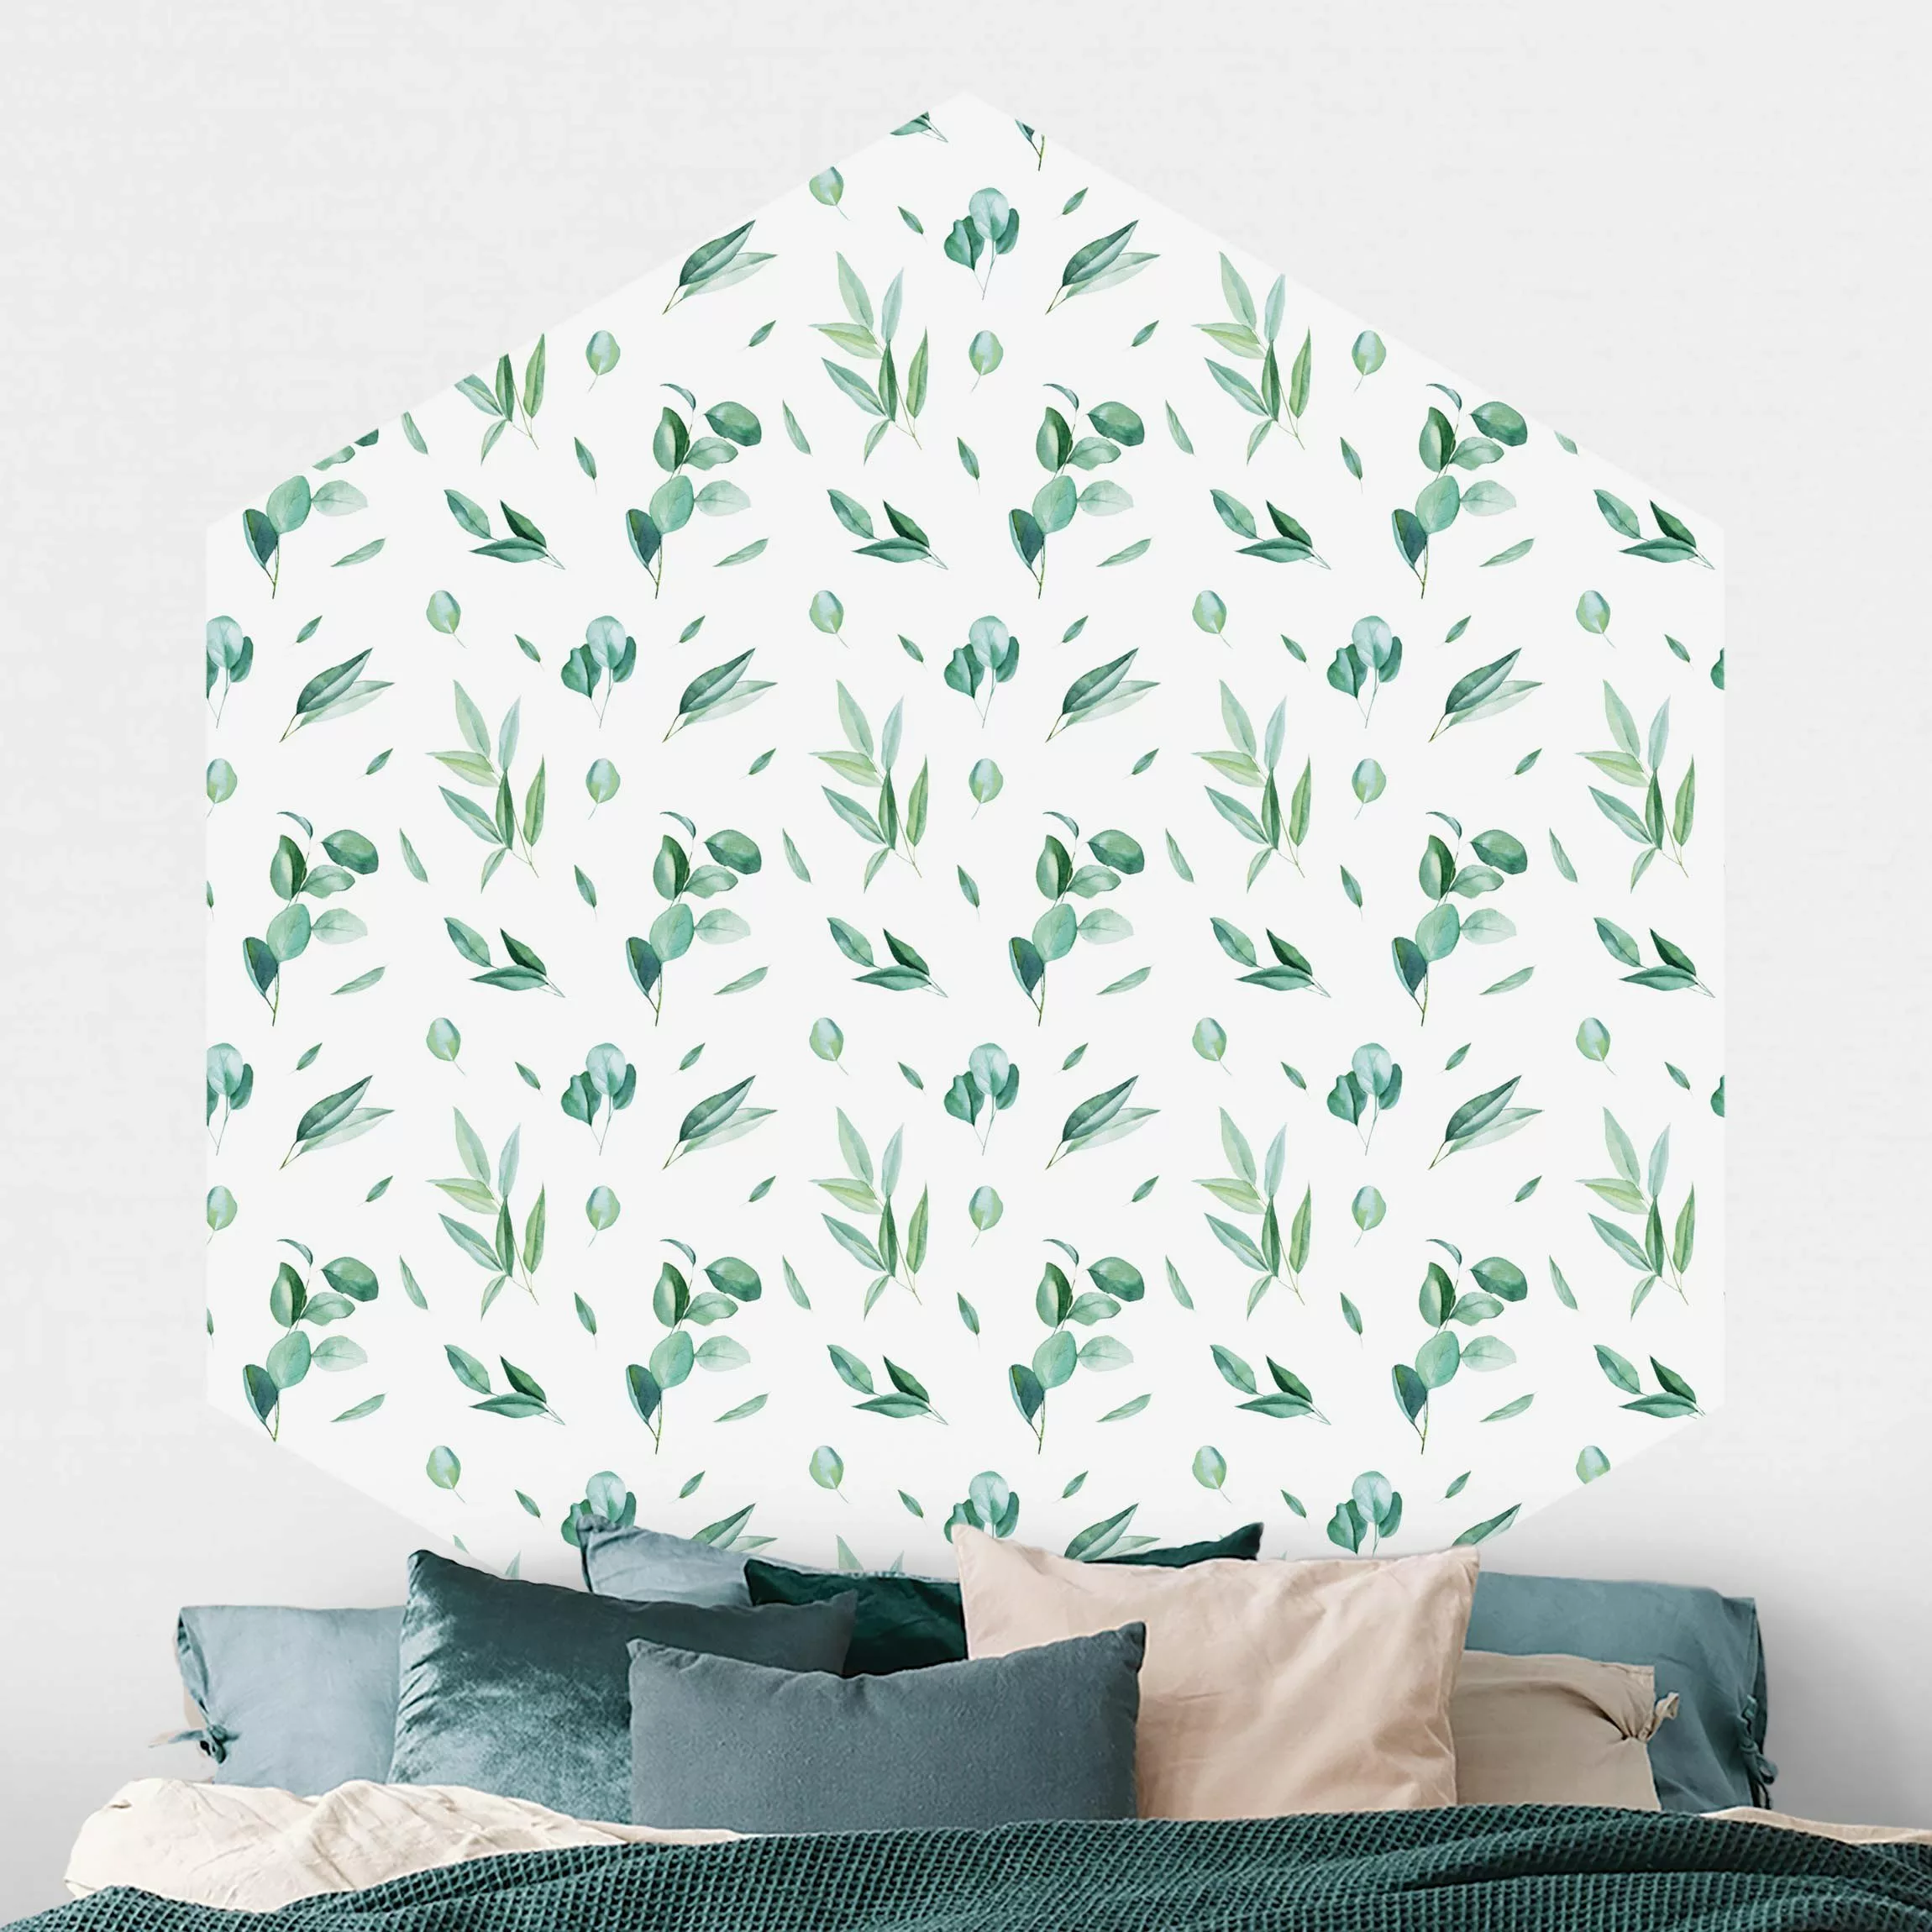 Hexagon Mustertapete selbstklebend Aquarell Muster Blätter und Eukalyptus günstig online kaufen